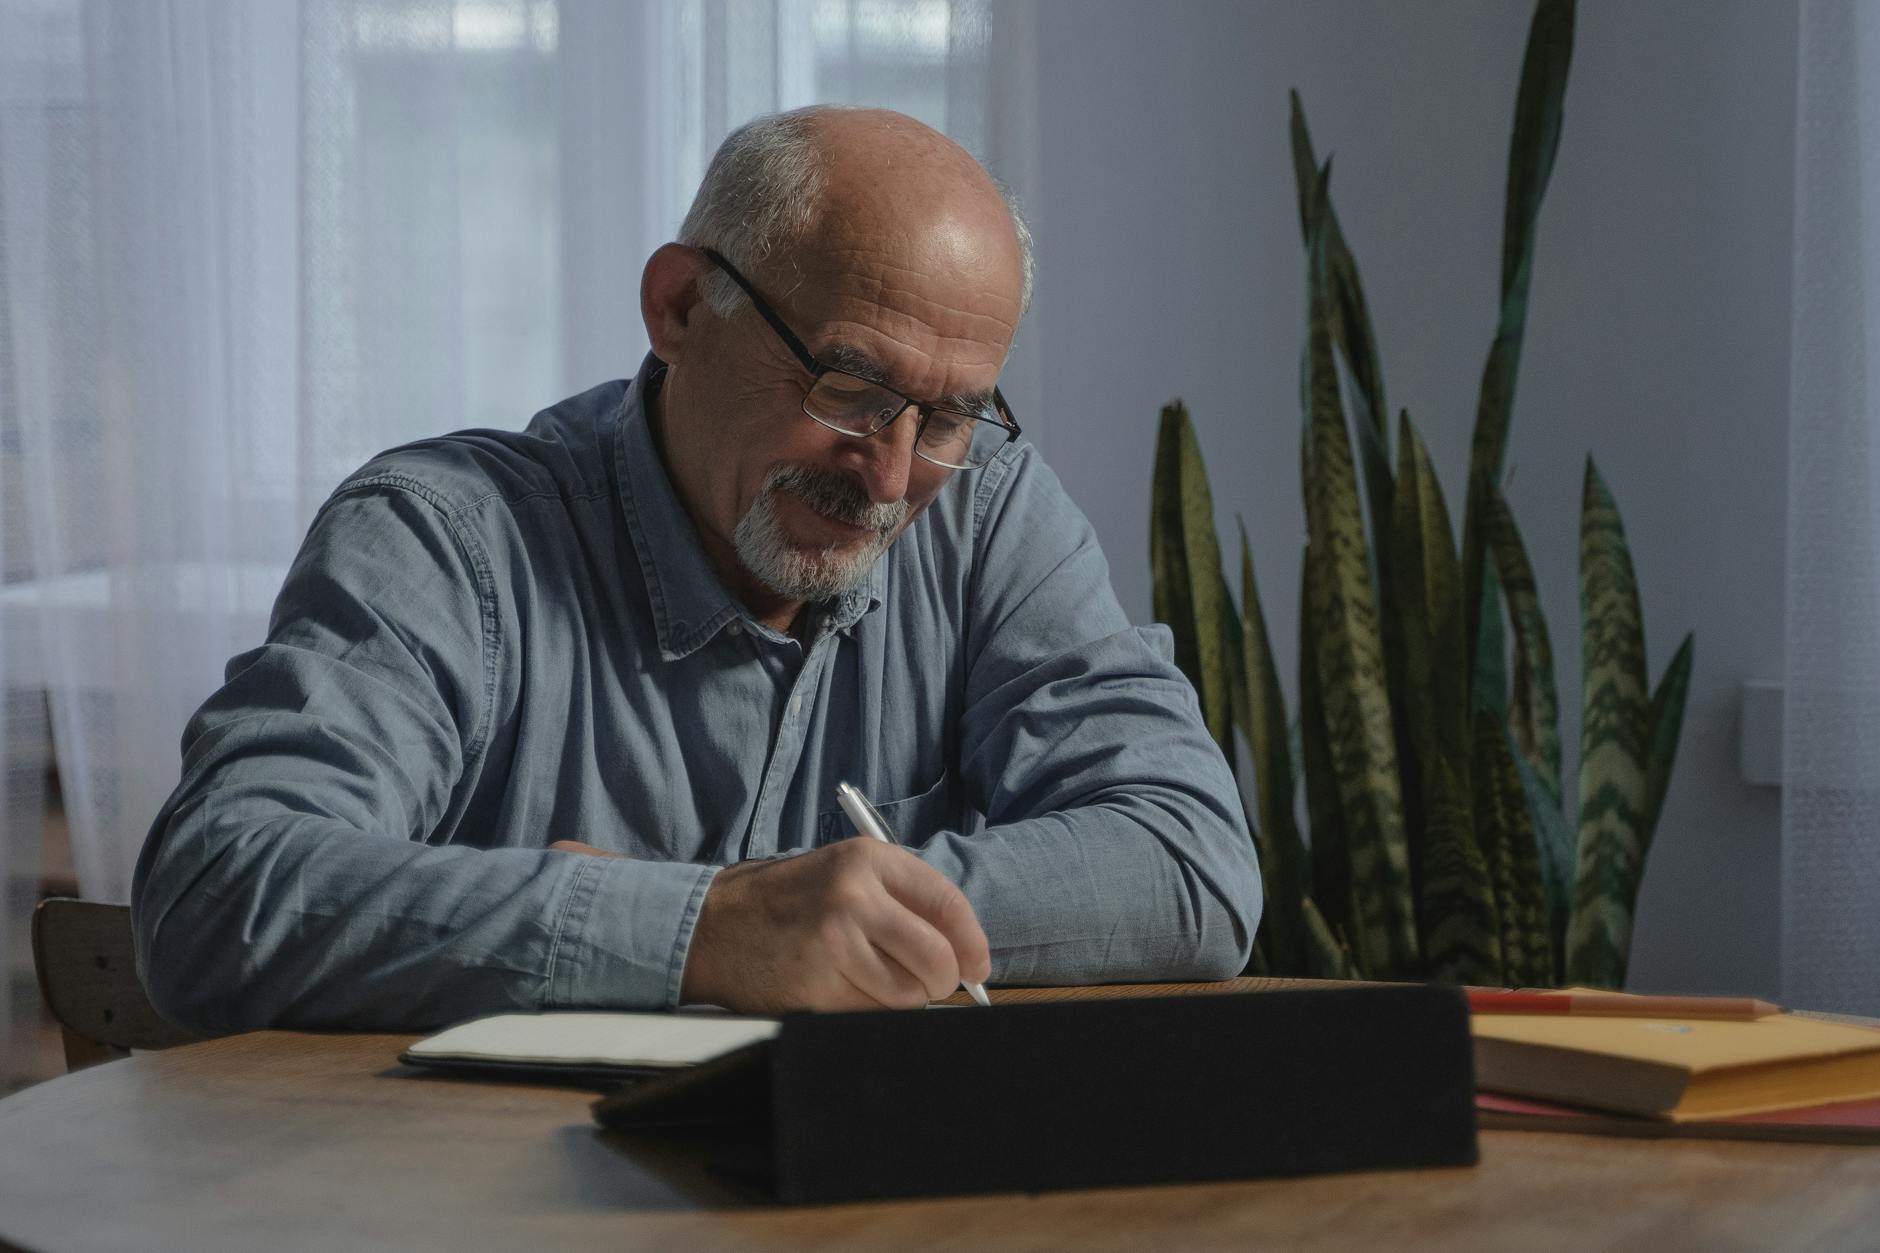 man wearing a gray long sleeve shirt writing on a notebook